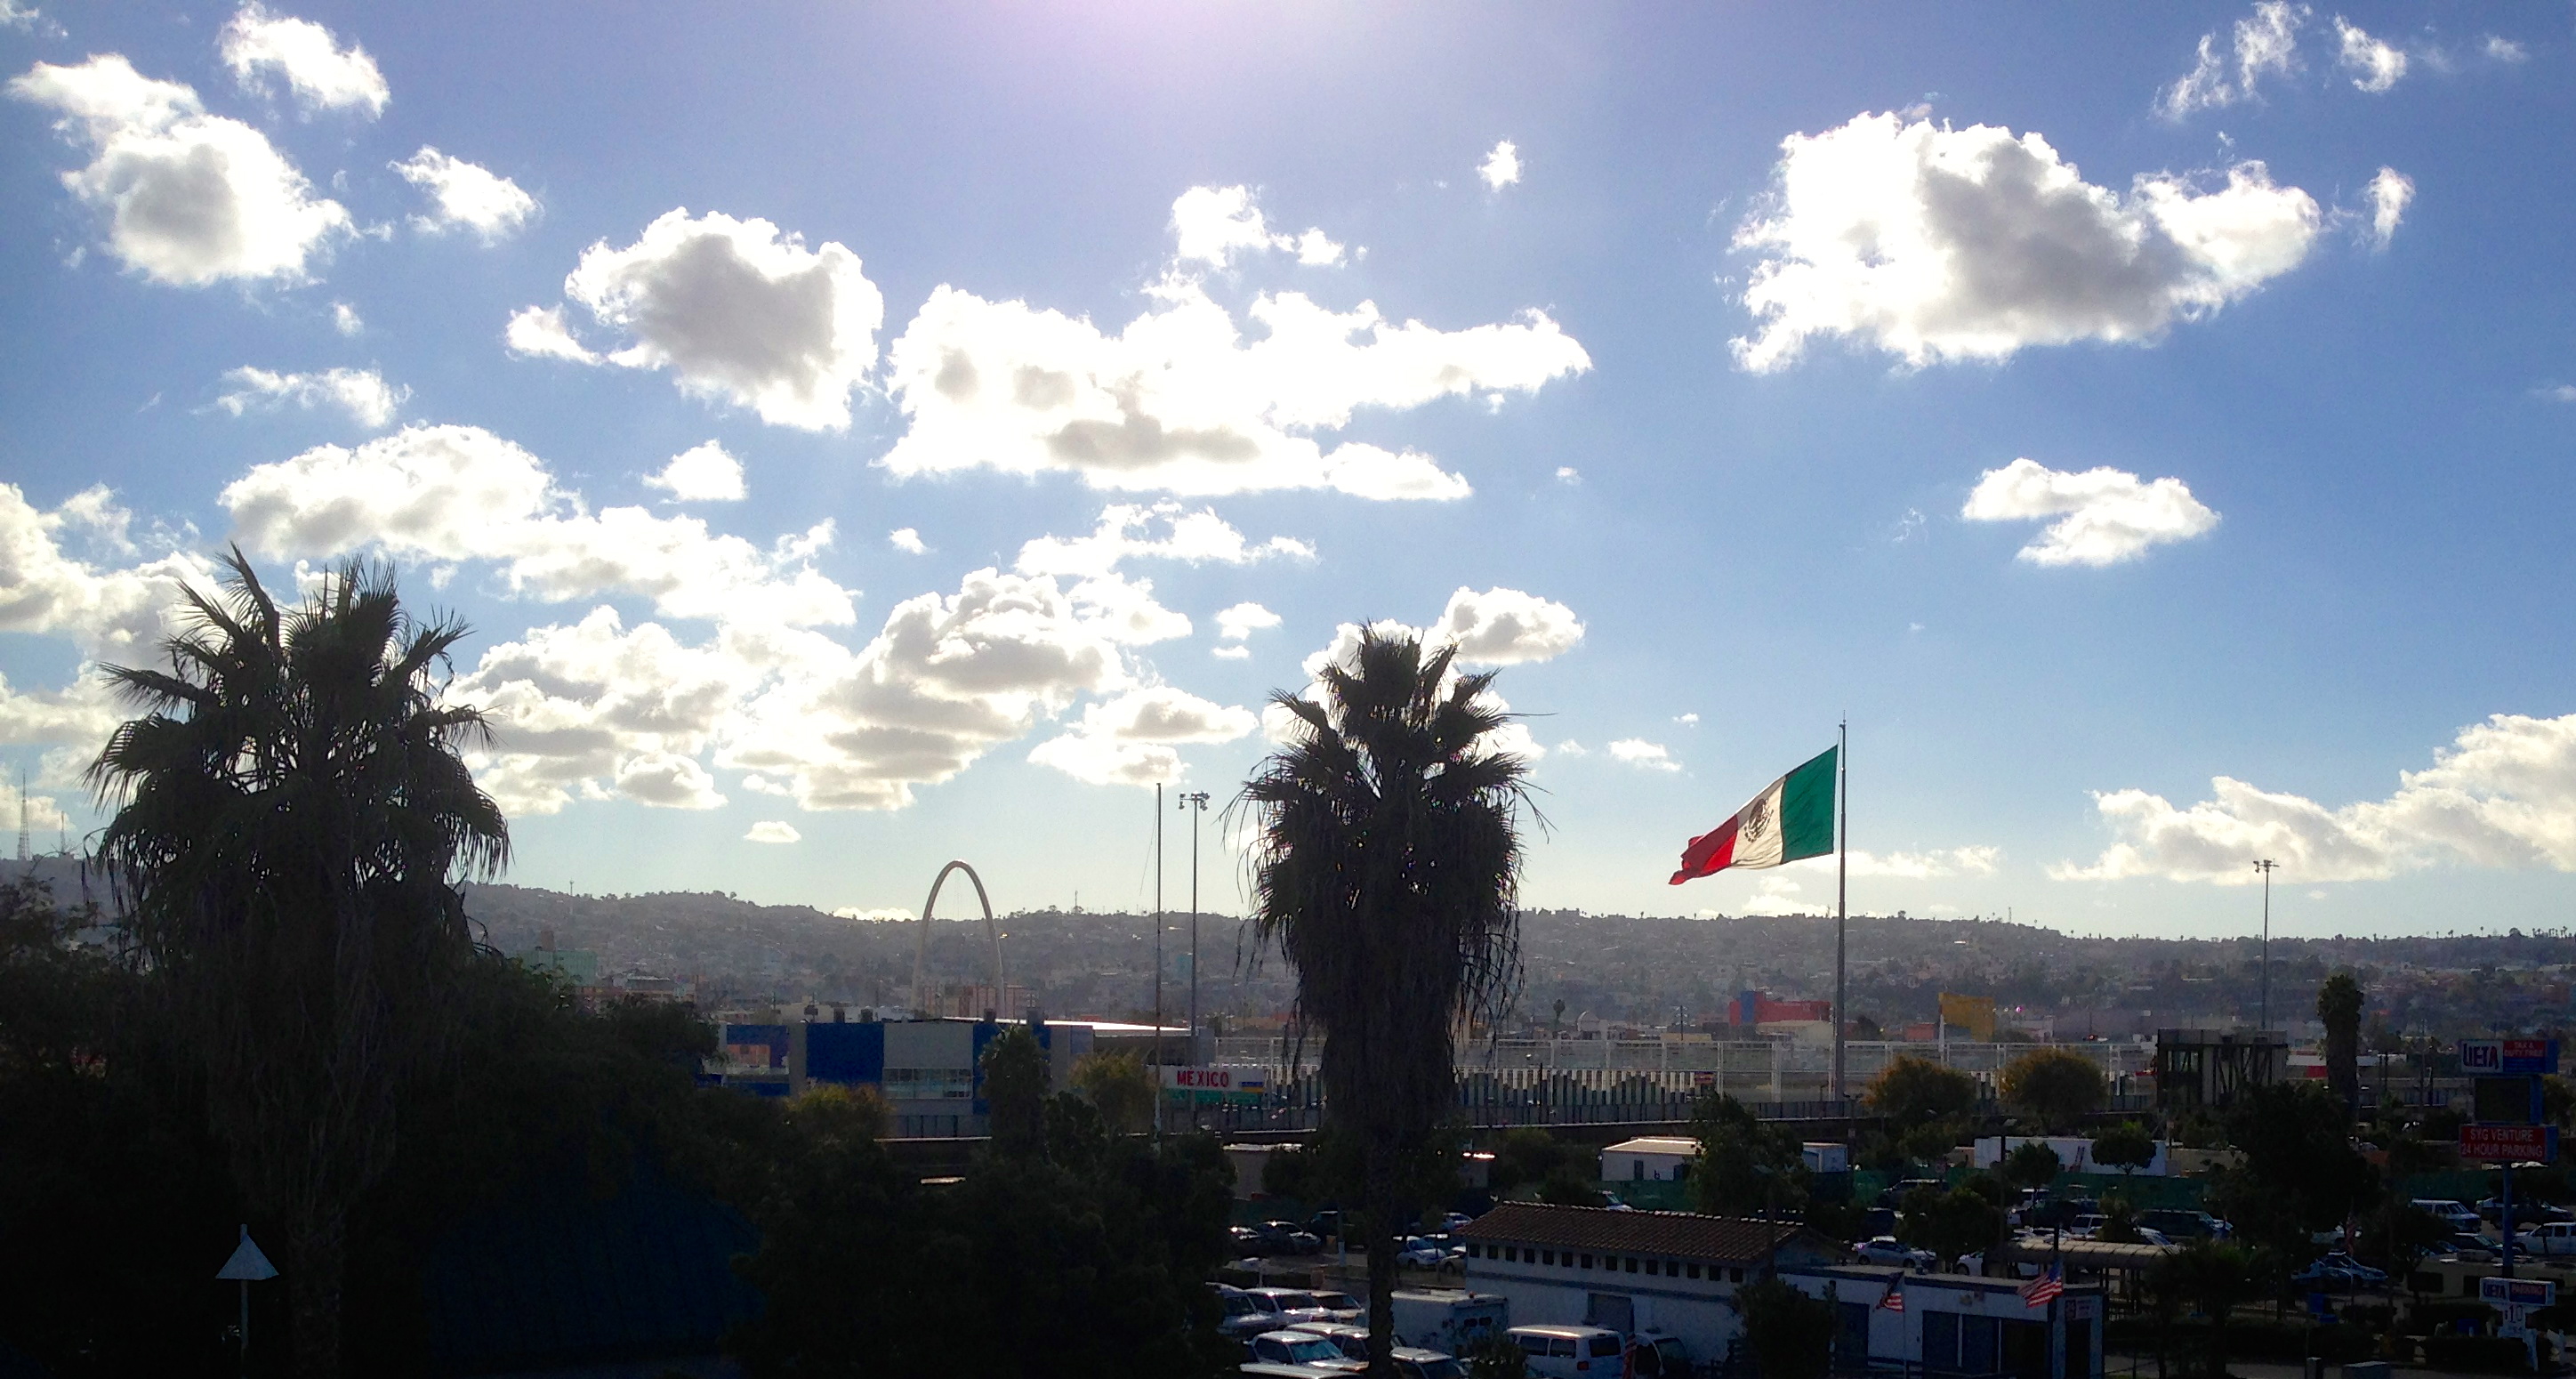 Tijuana at the San Ysidro Border crossing